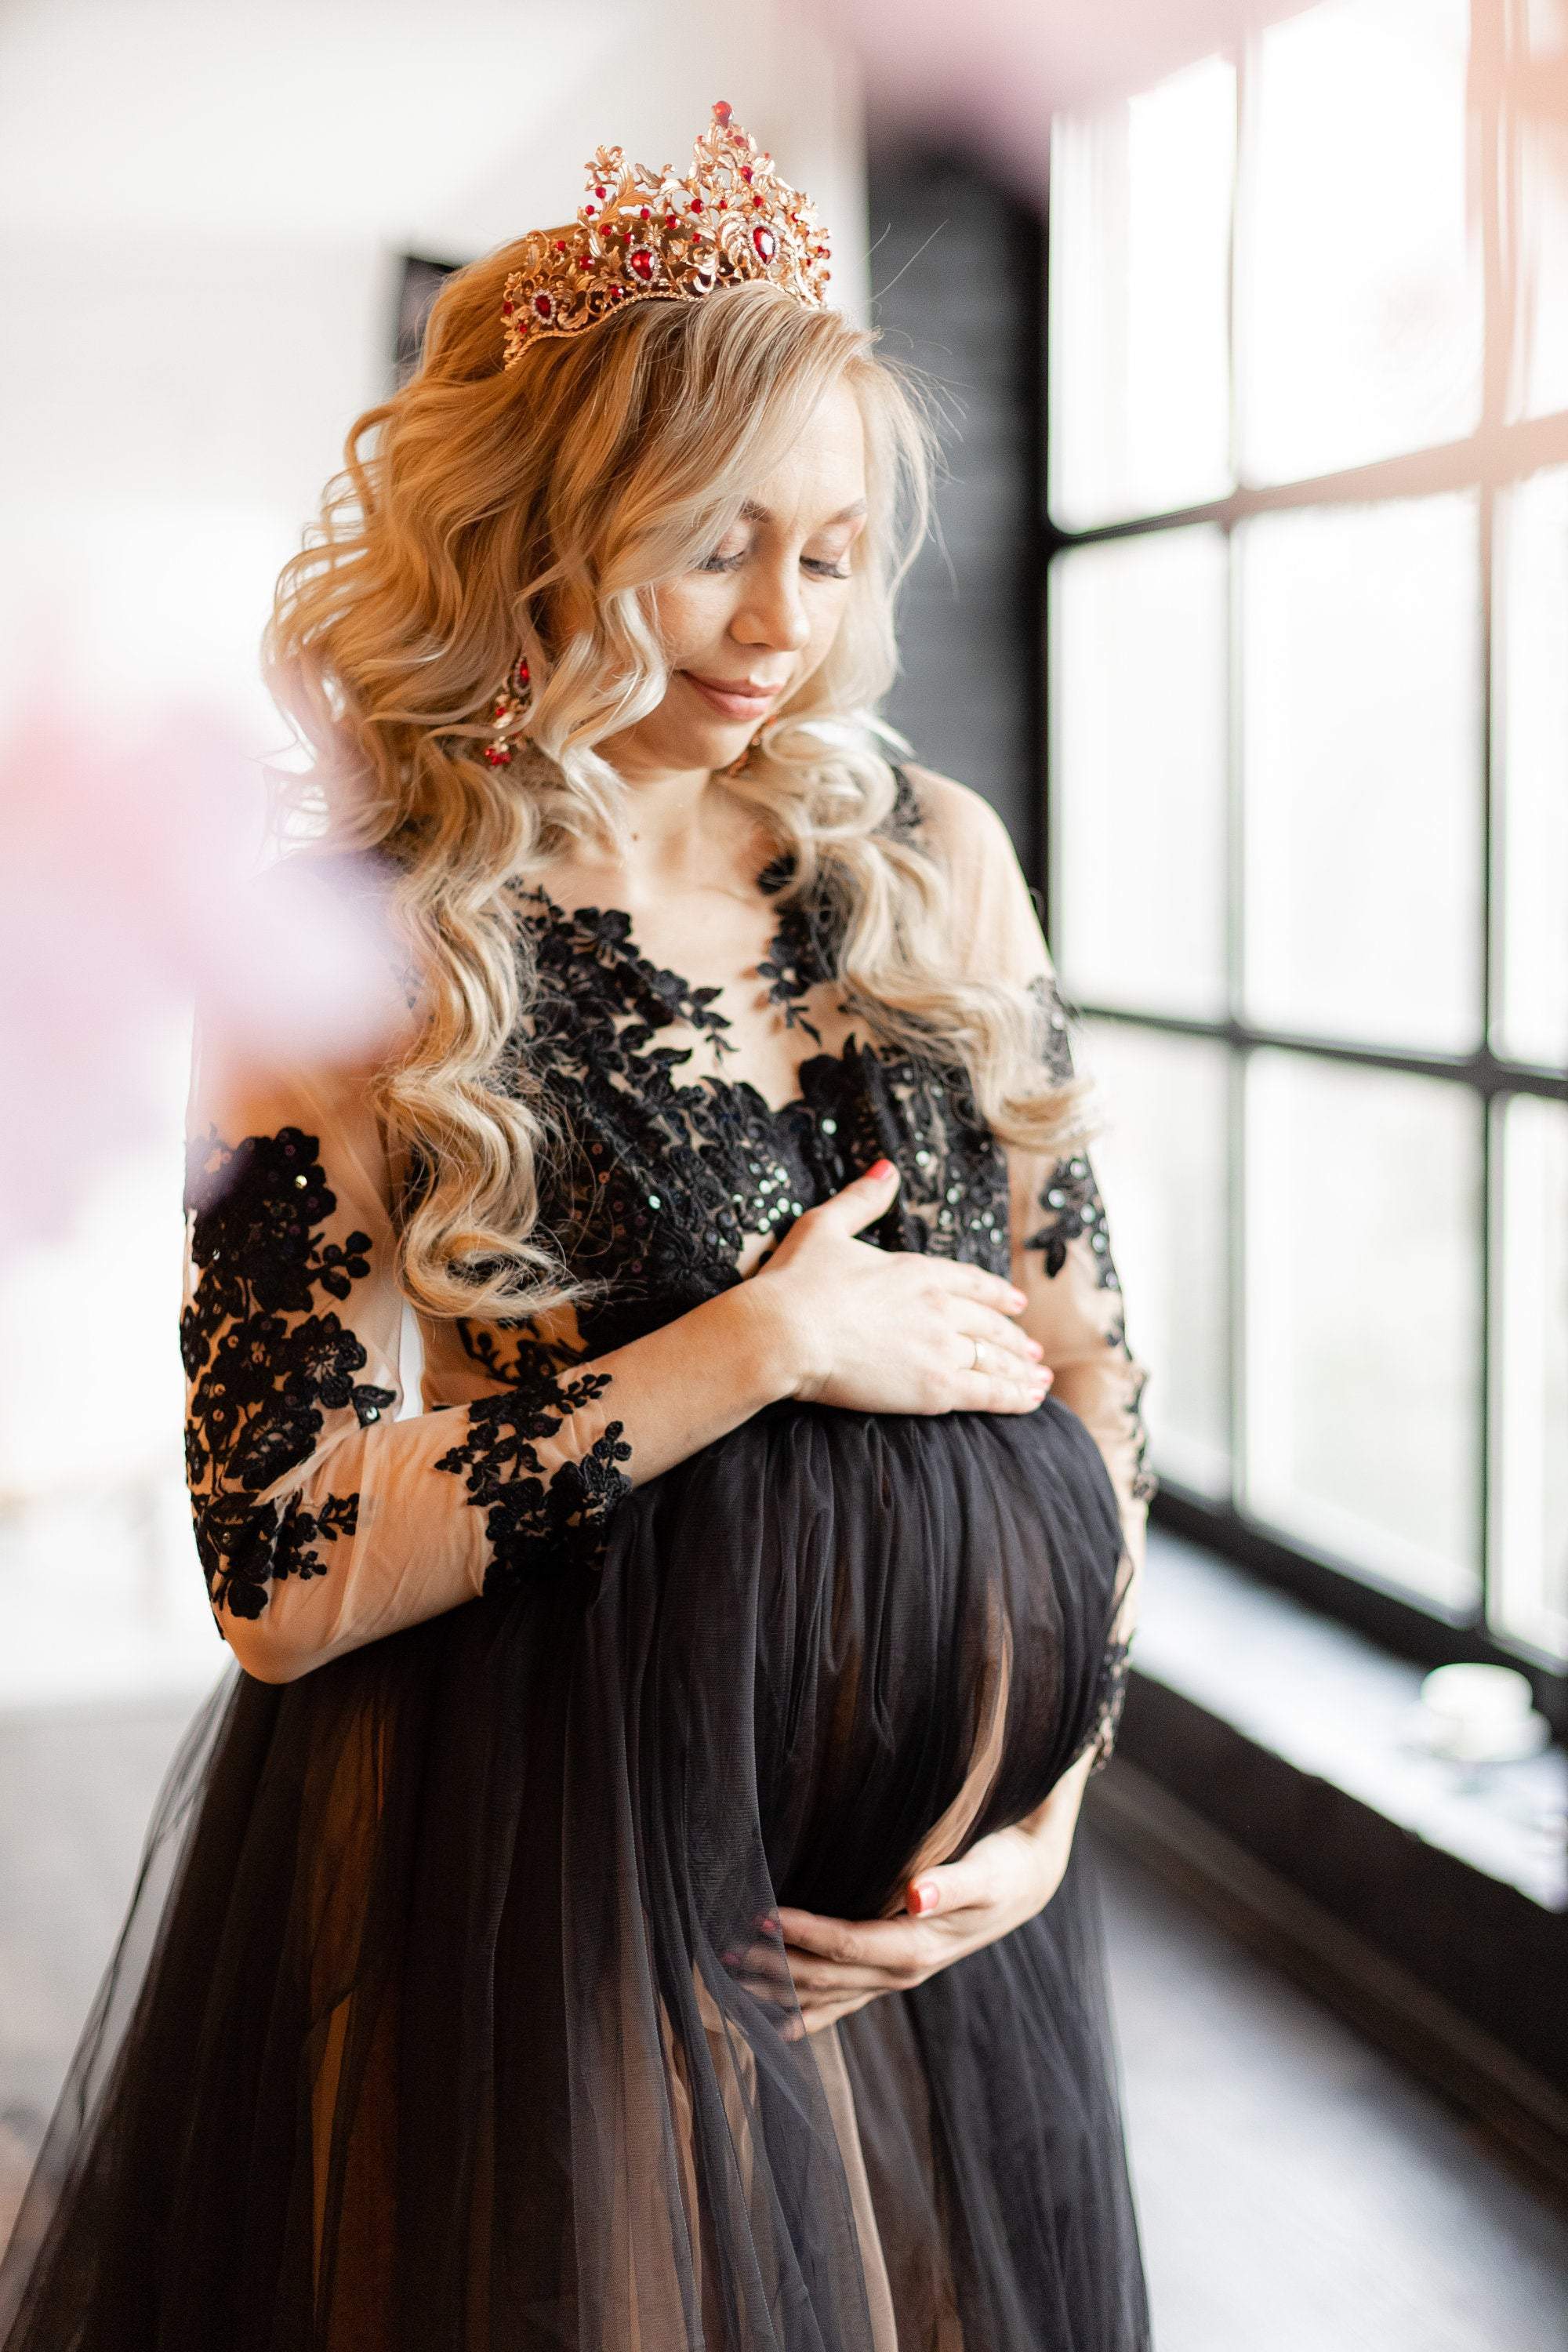 Maternity Dress For Photoshoot, Pregnancy Robe Dress, Long Tulle Mater